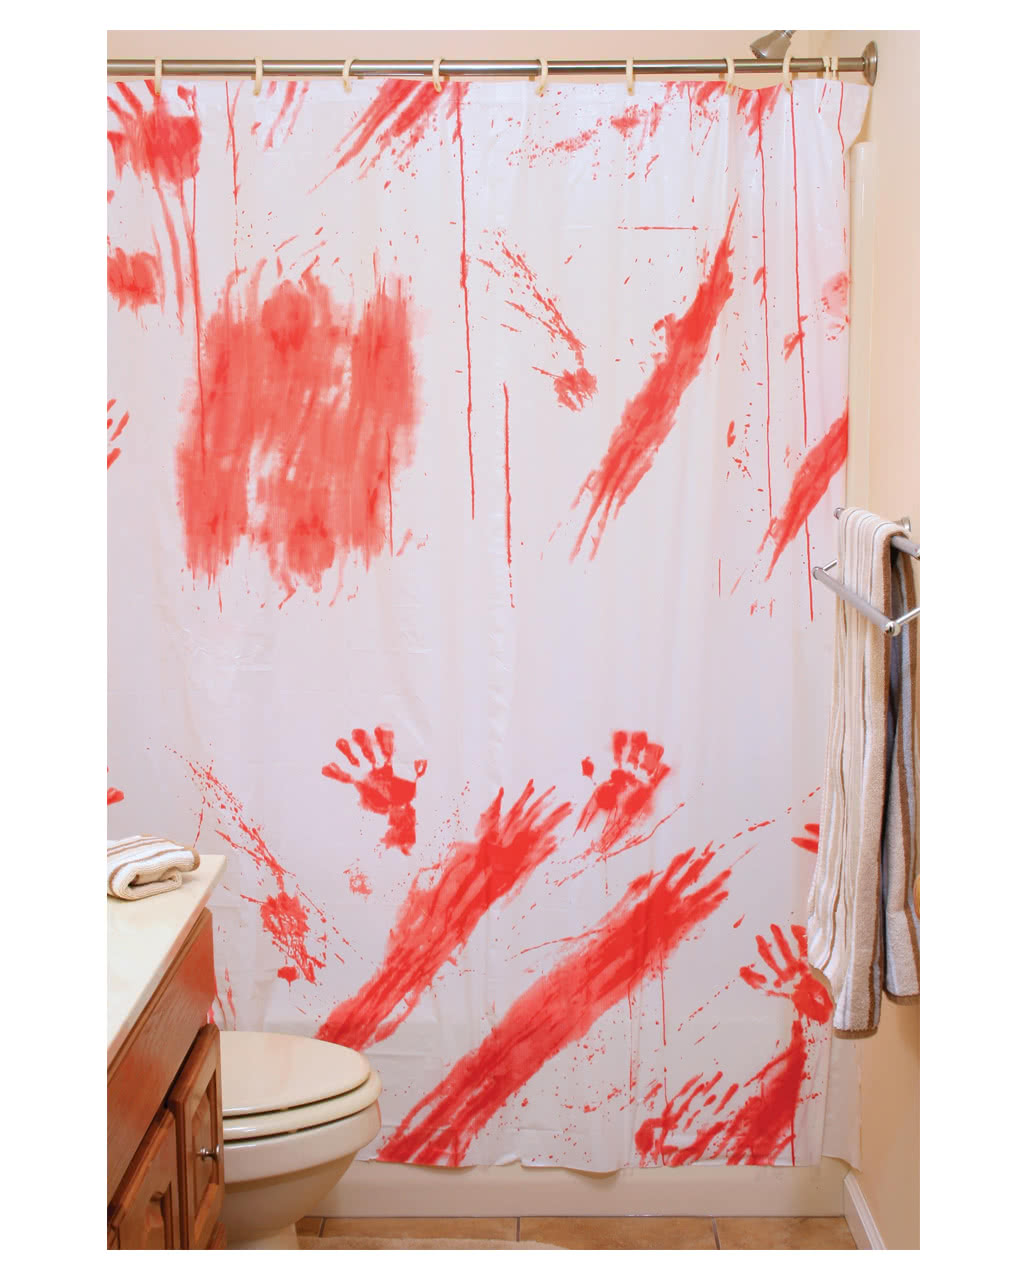 Details about   Blut Handabdruck Duschvorhang Stilvoll Familie Badezimmer Ring Ziehen Halloween 